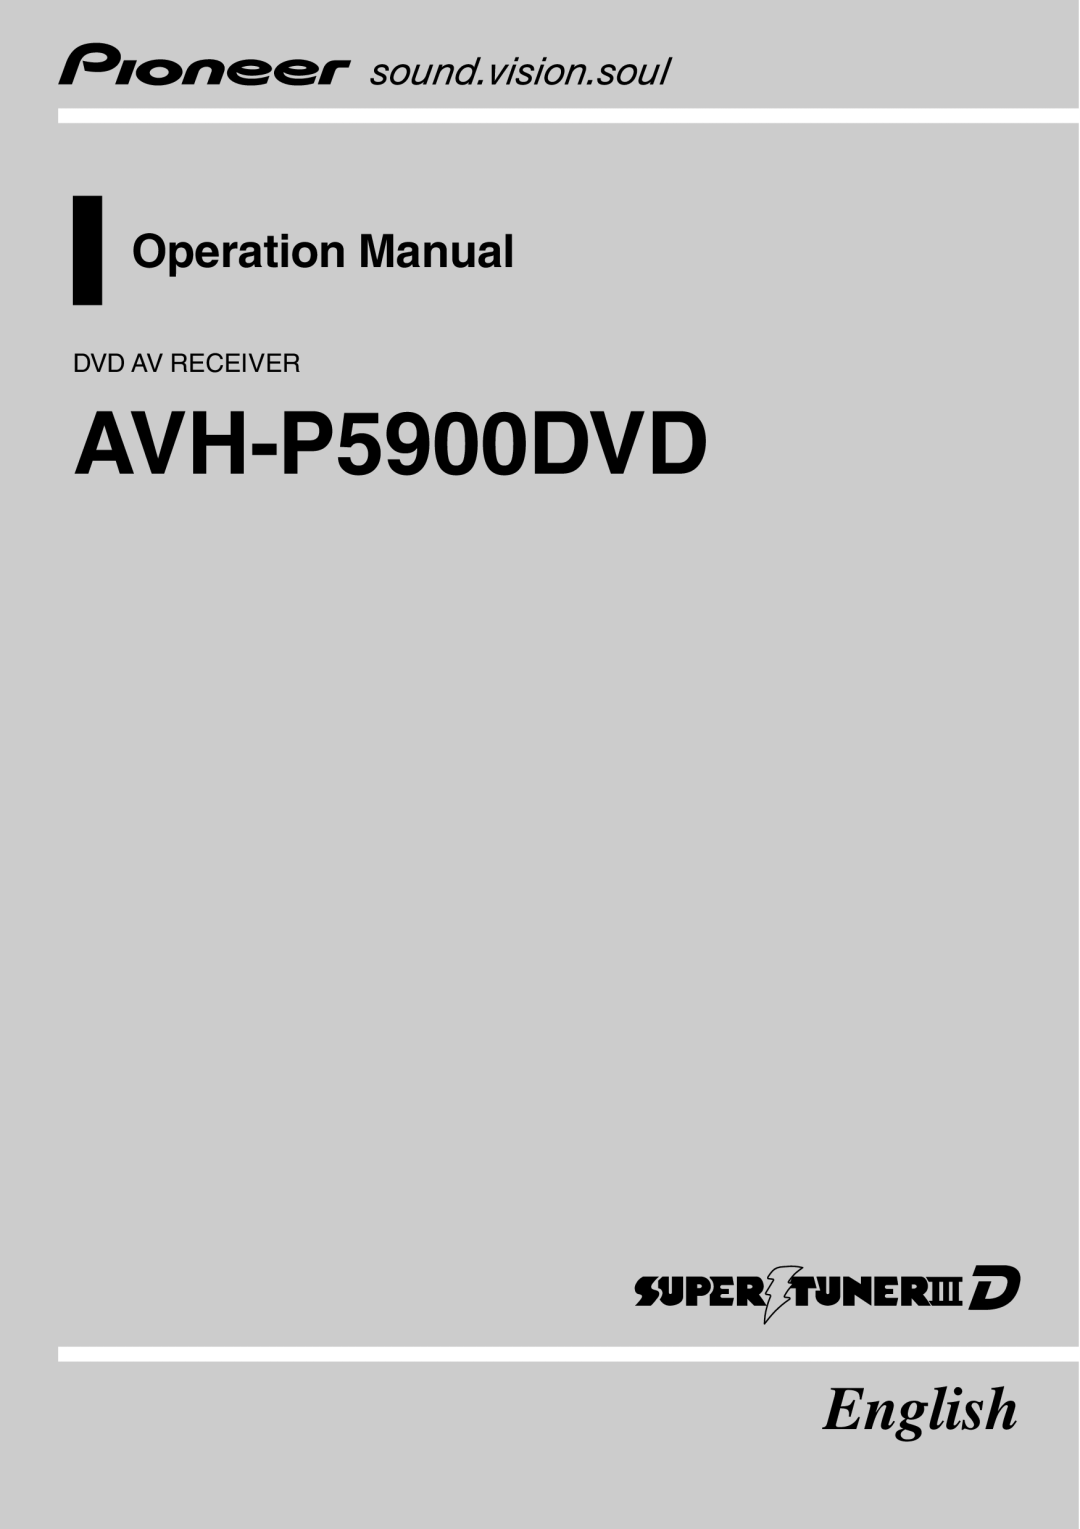 Pioneer operation manual AVH-P5900DVD, English 